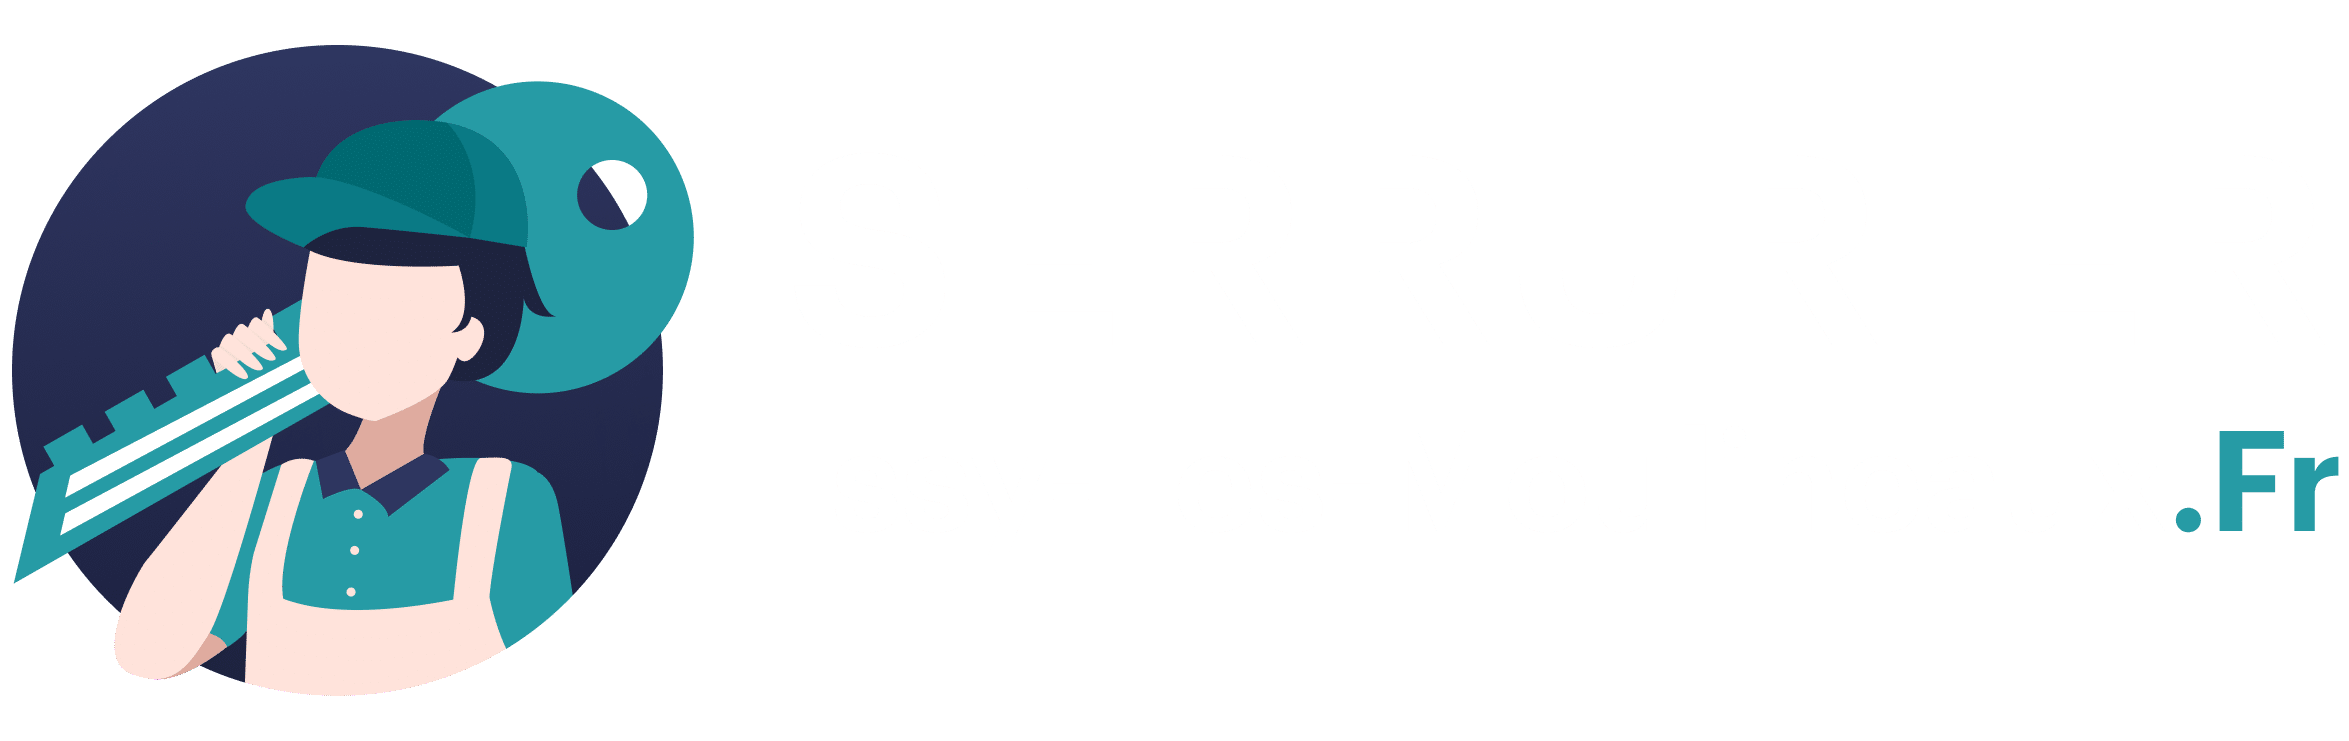 serrurierissylesmoulineaux.fr Logo